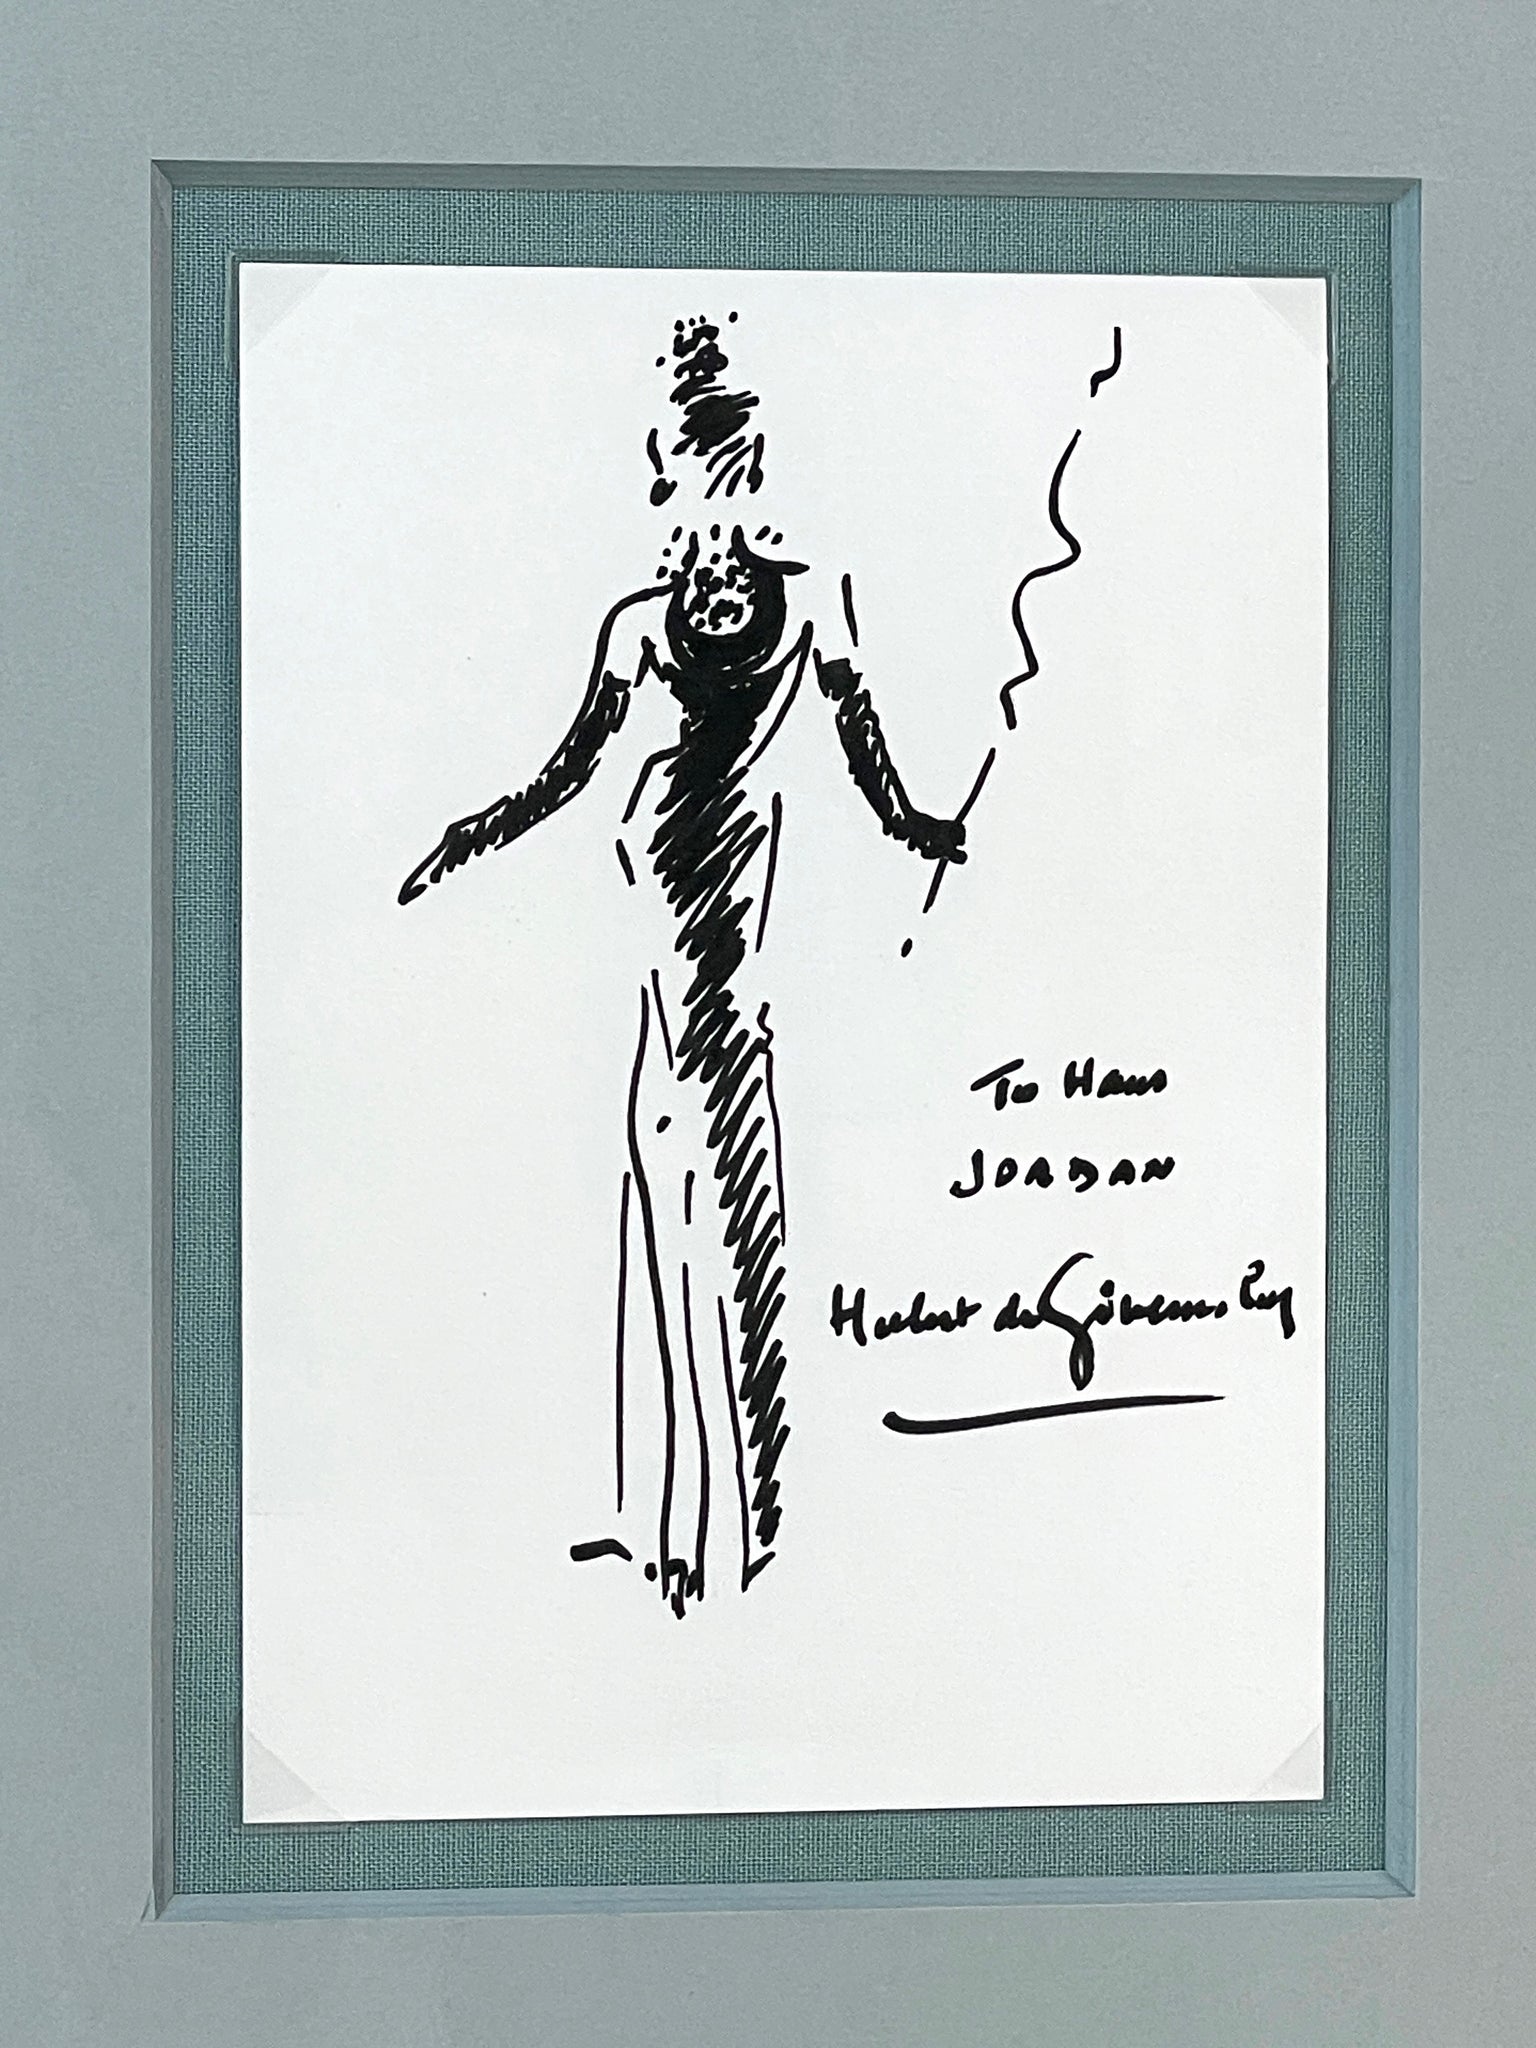 Givenchy, Hubert de. (1927–2018) The Little Black Dress - Audrey Hepburn in "Breakfast at Tiffany's"